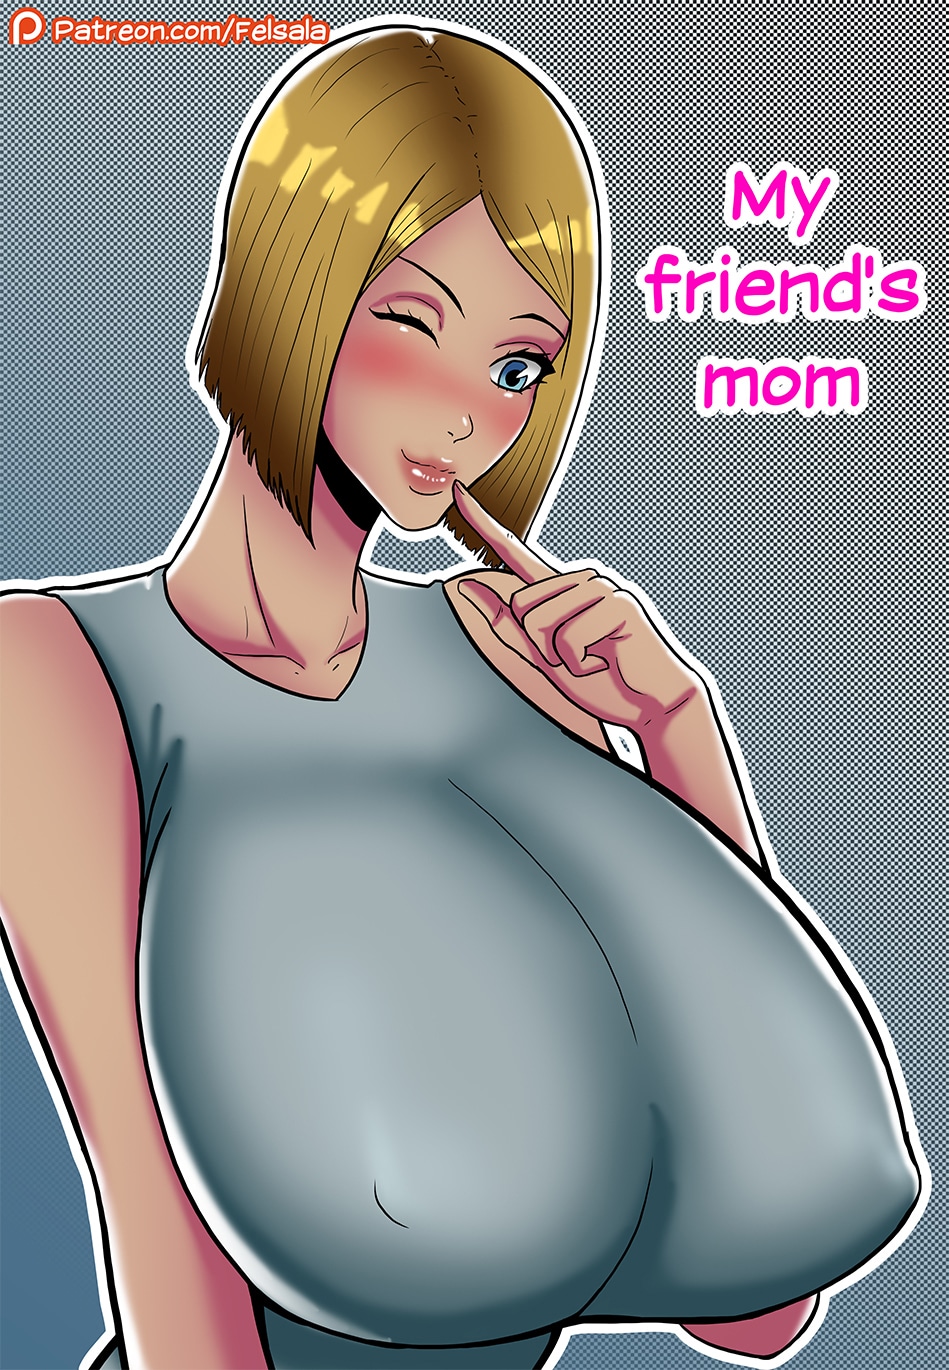 Friends Mom - My Friend's Mom - Felsala - KingComiX.com